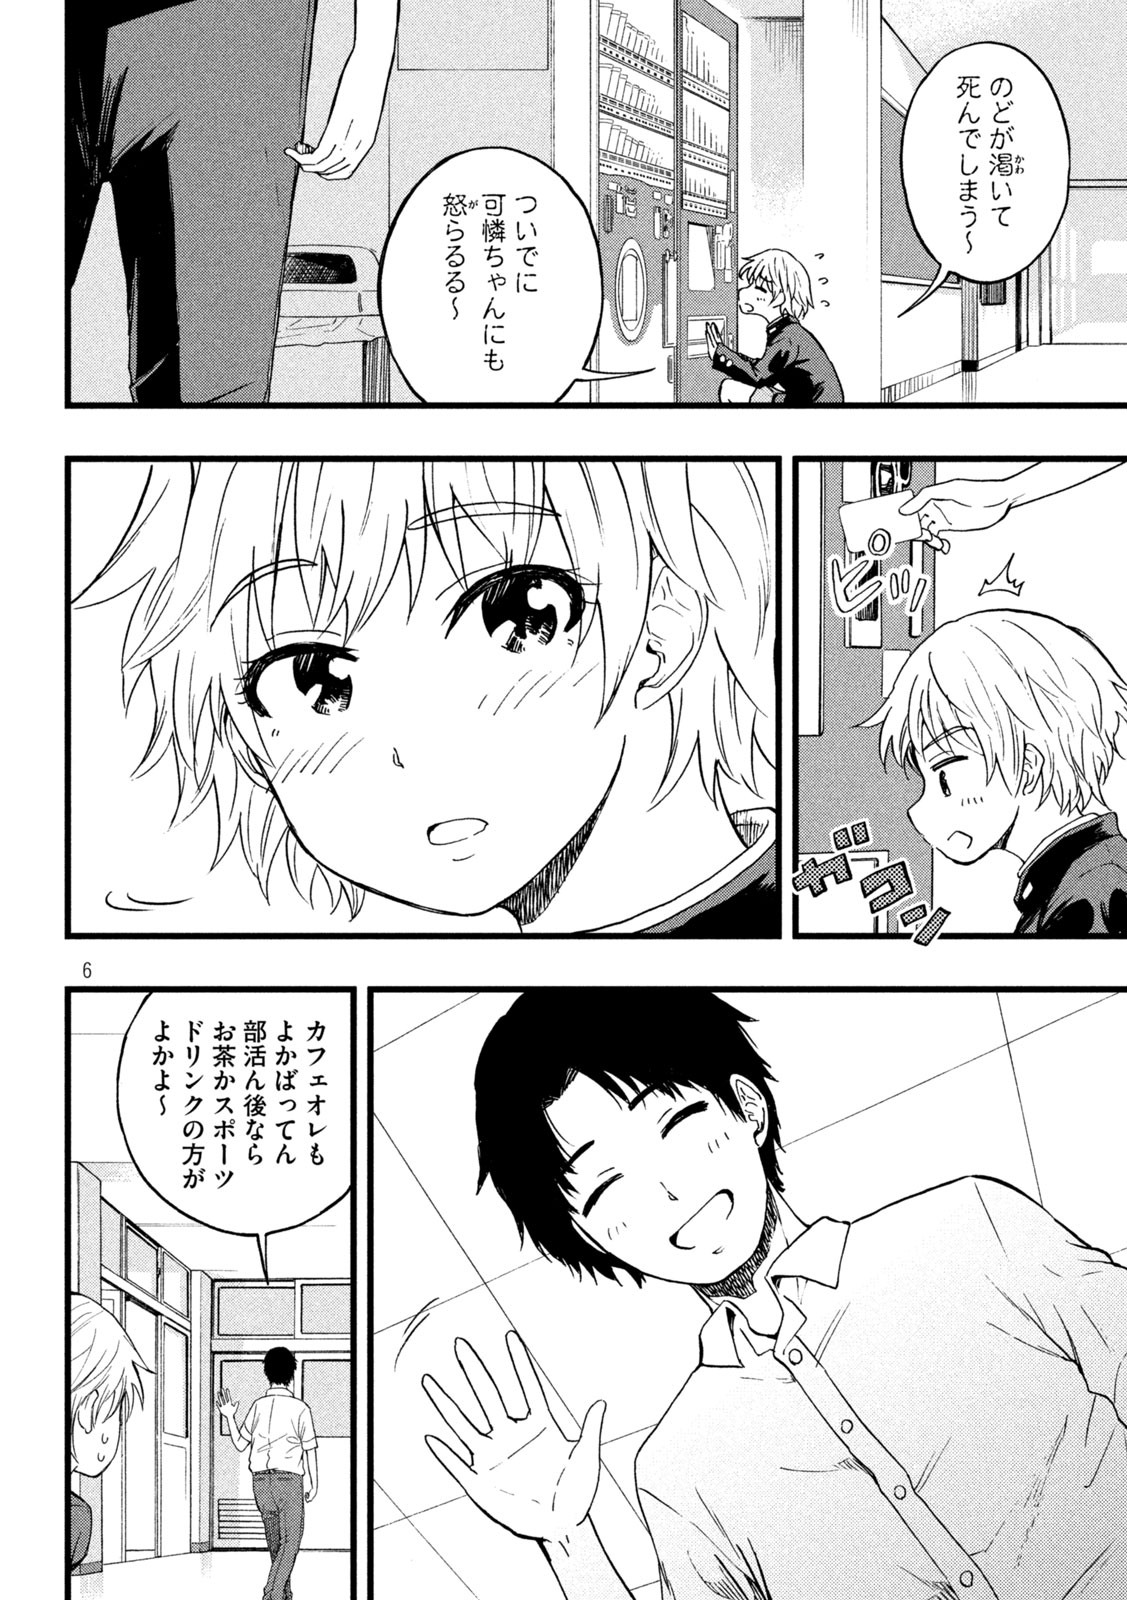 Koharu haru! - Chapter 40 - Page 2